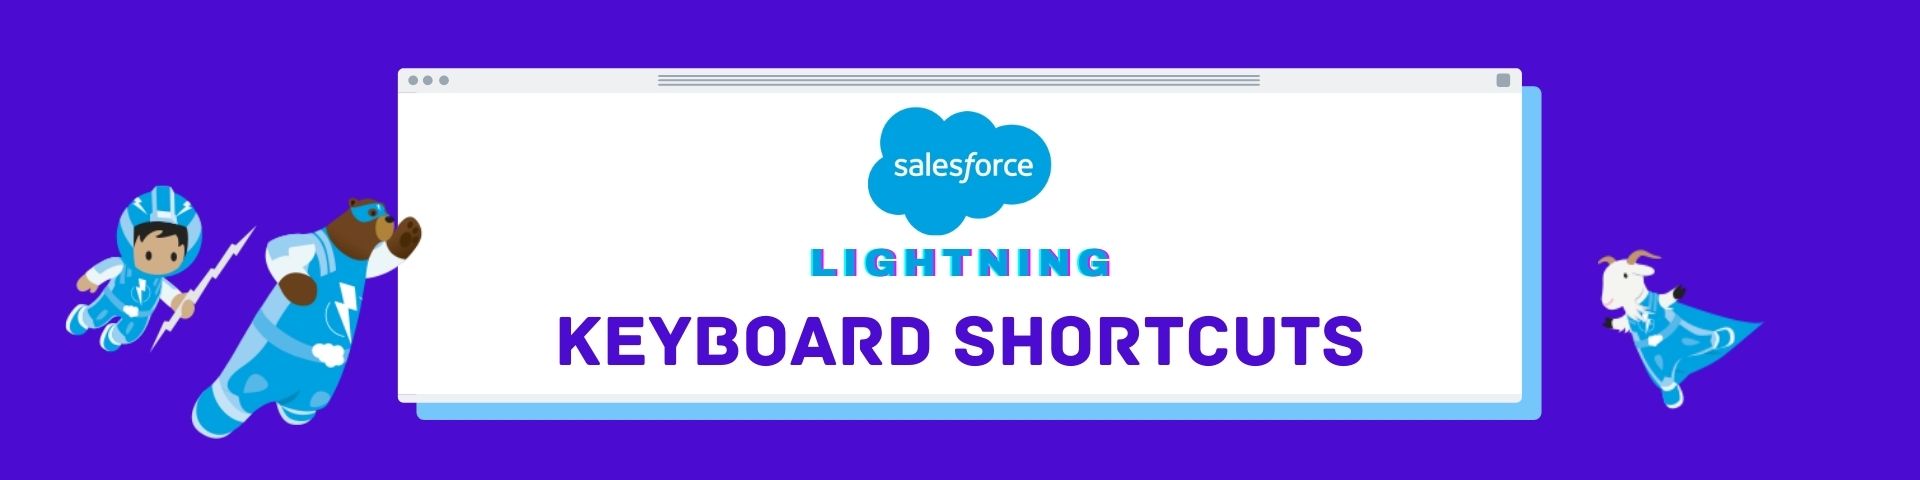 Salesforce Lightning Keyboard shortcuts